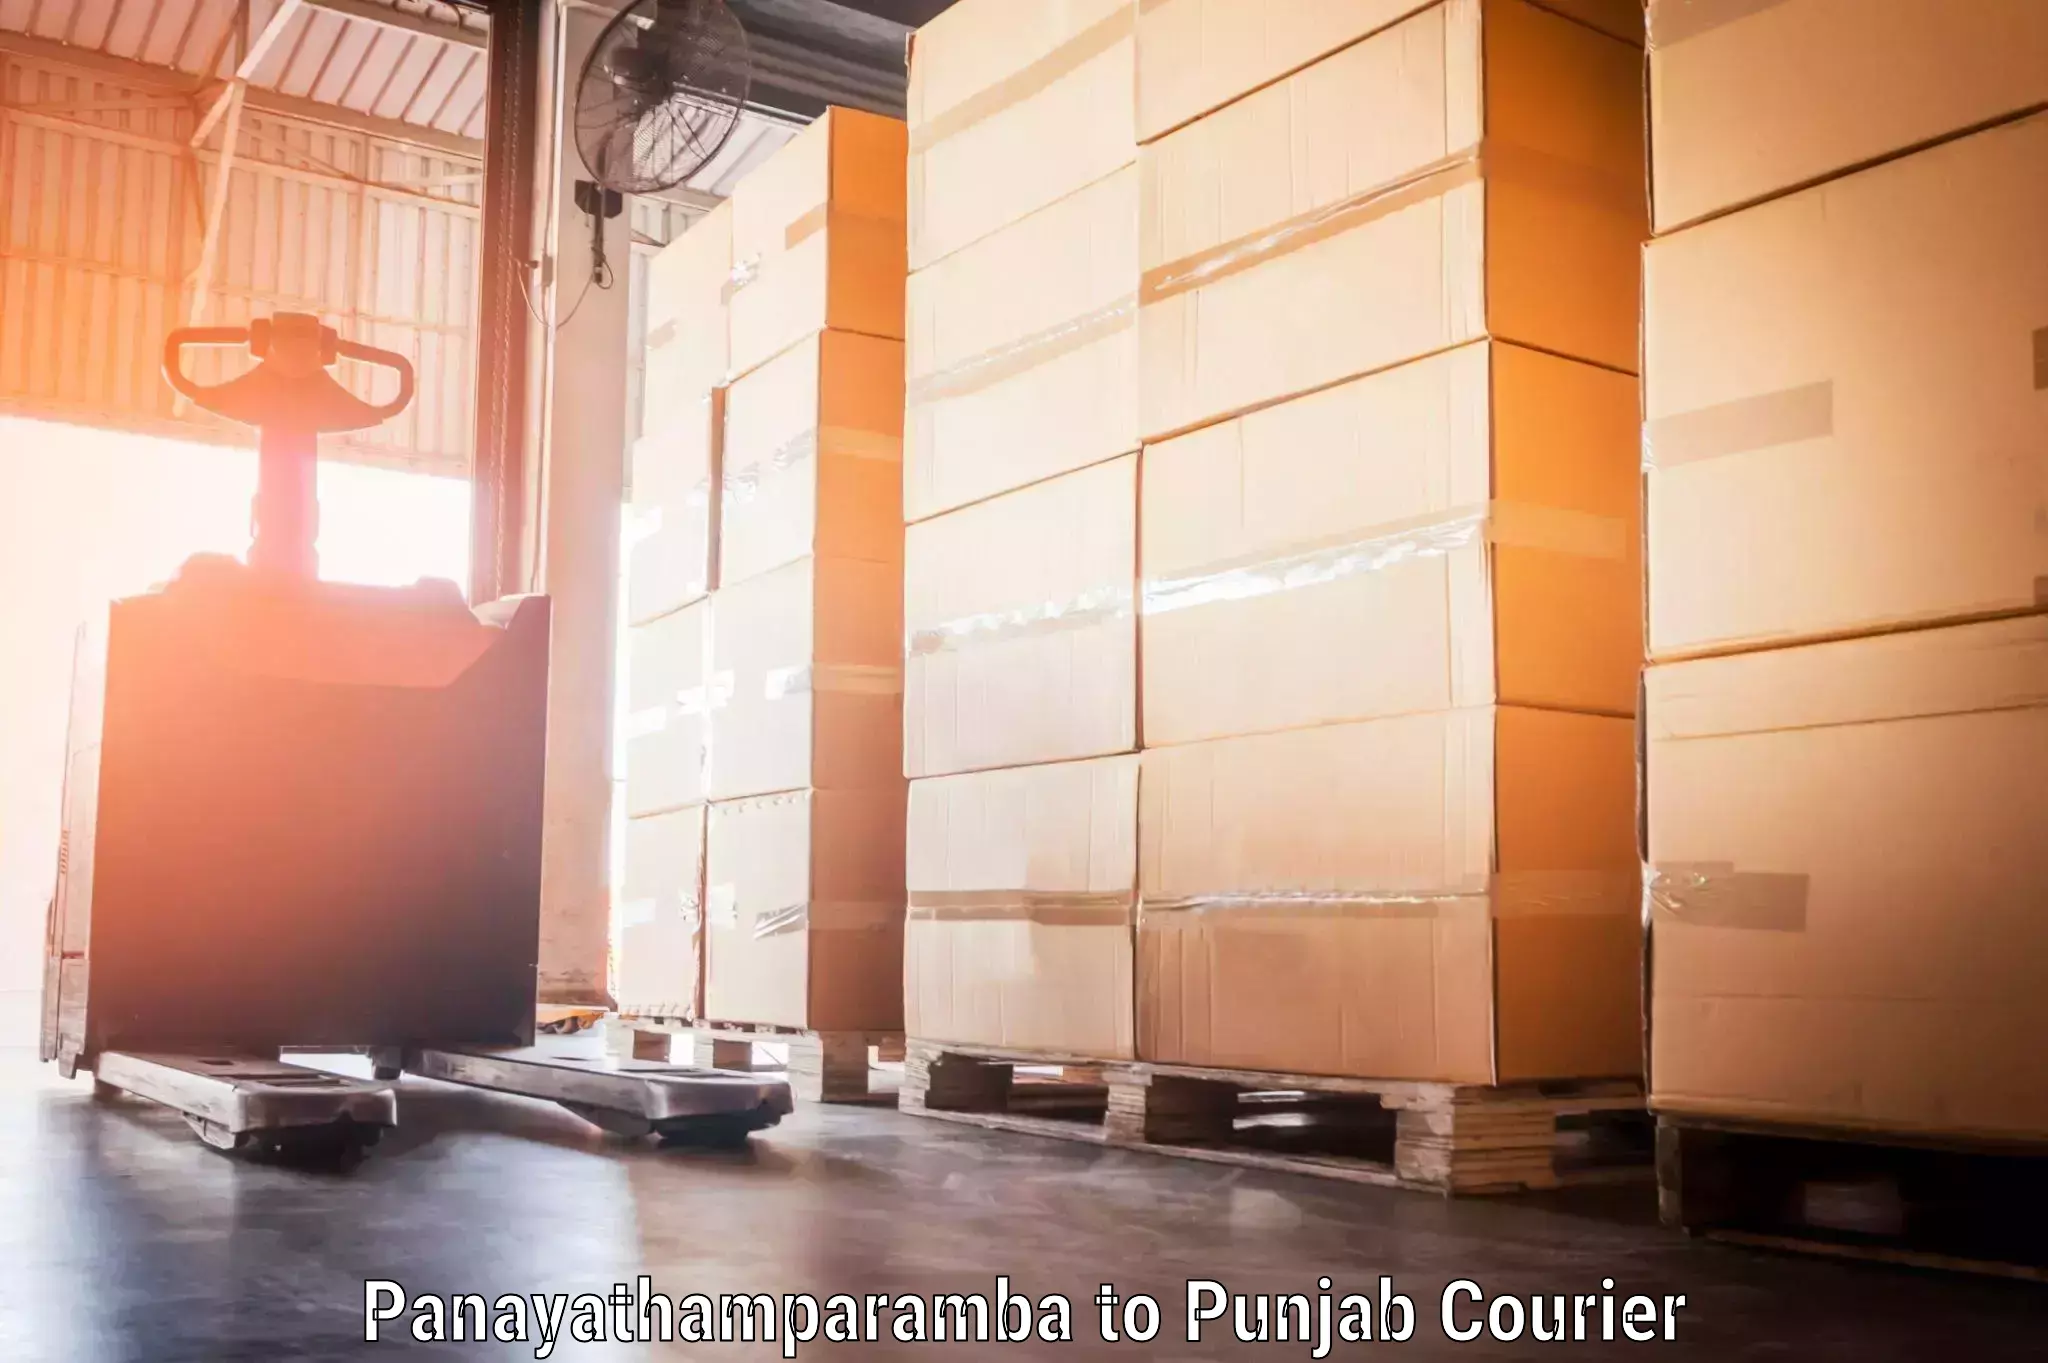 Door-to-door baggage service Panayathamparamba to Zirakpur